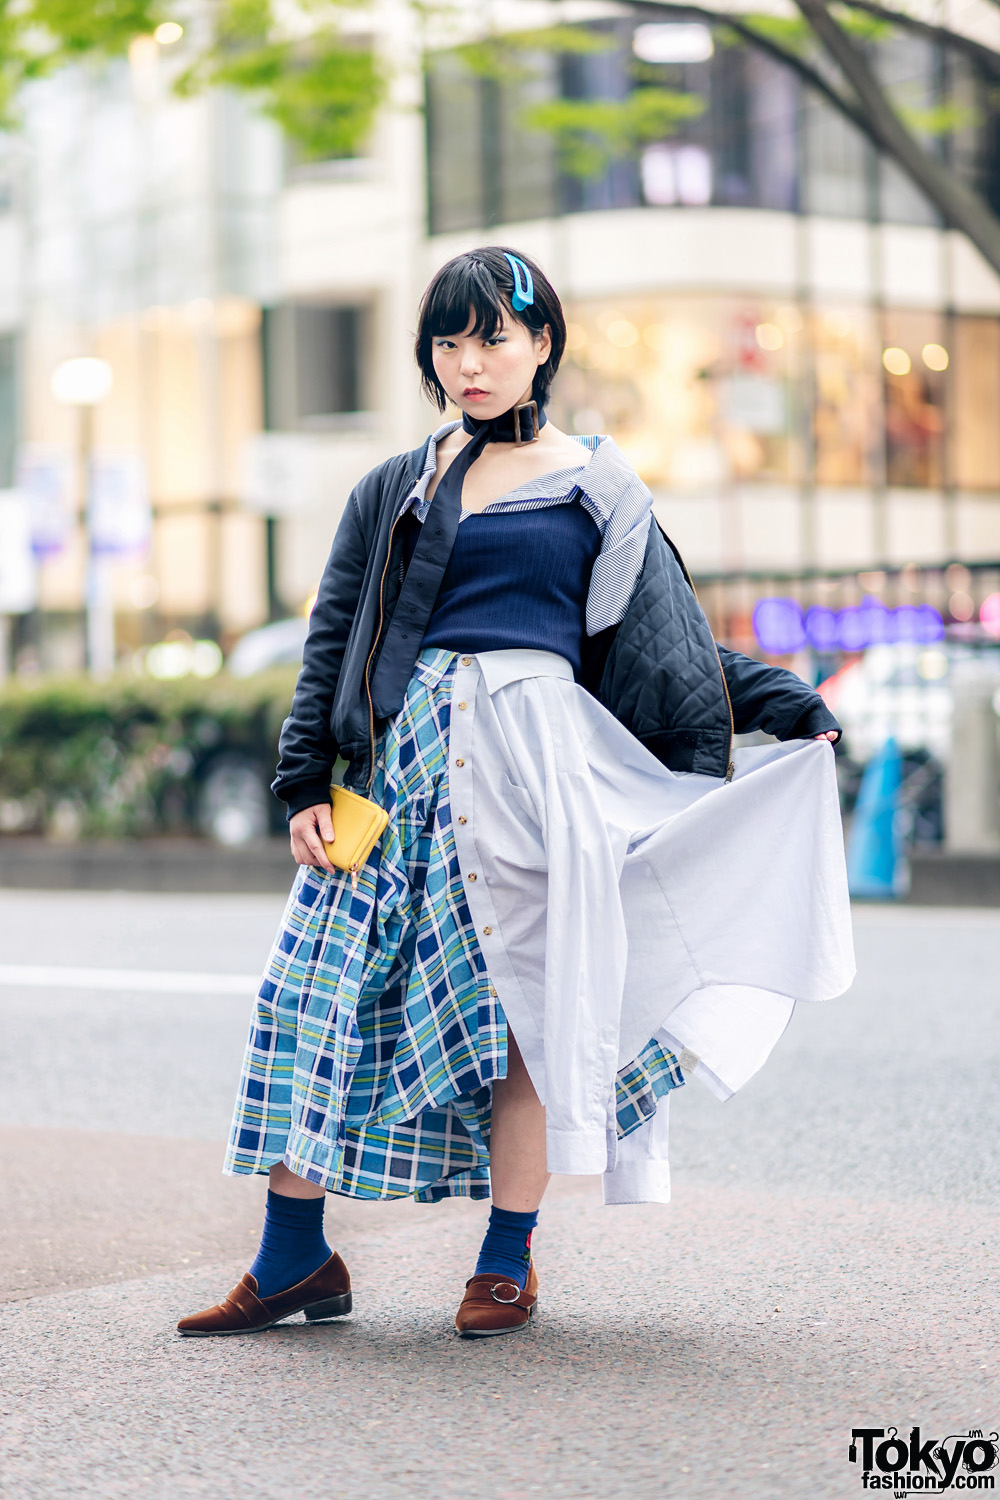 Japanese Remake Fashion in Harajuku w/ Skirt Made of Two Dress Shirts